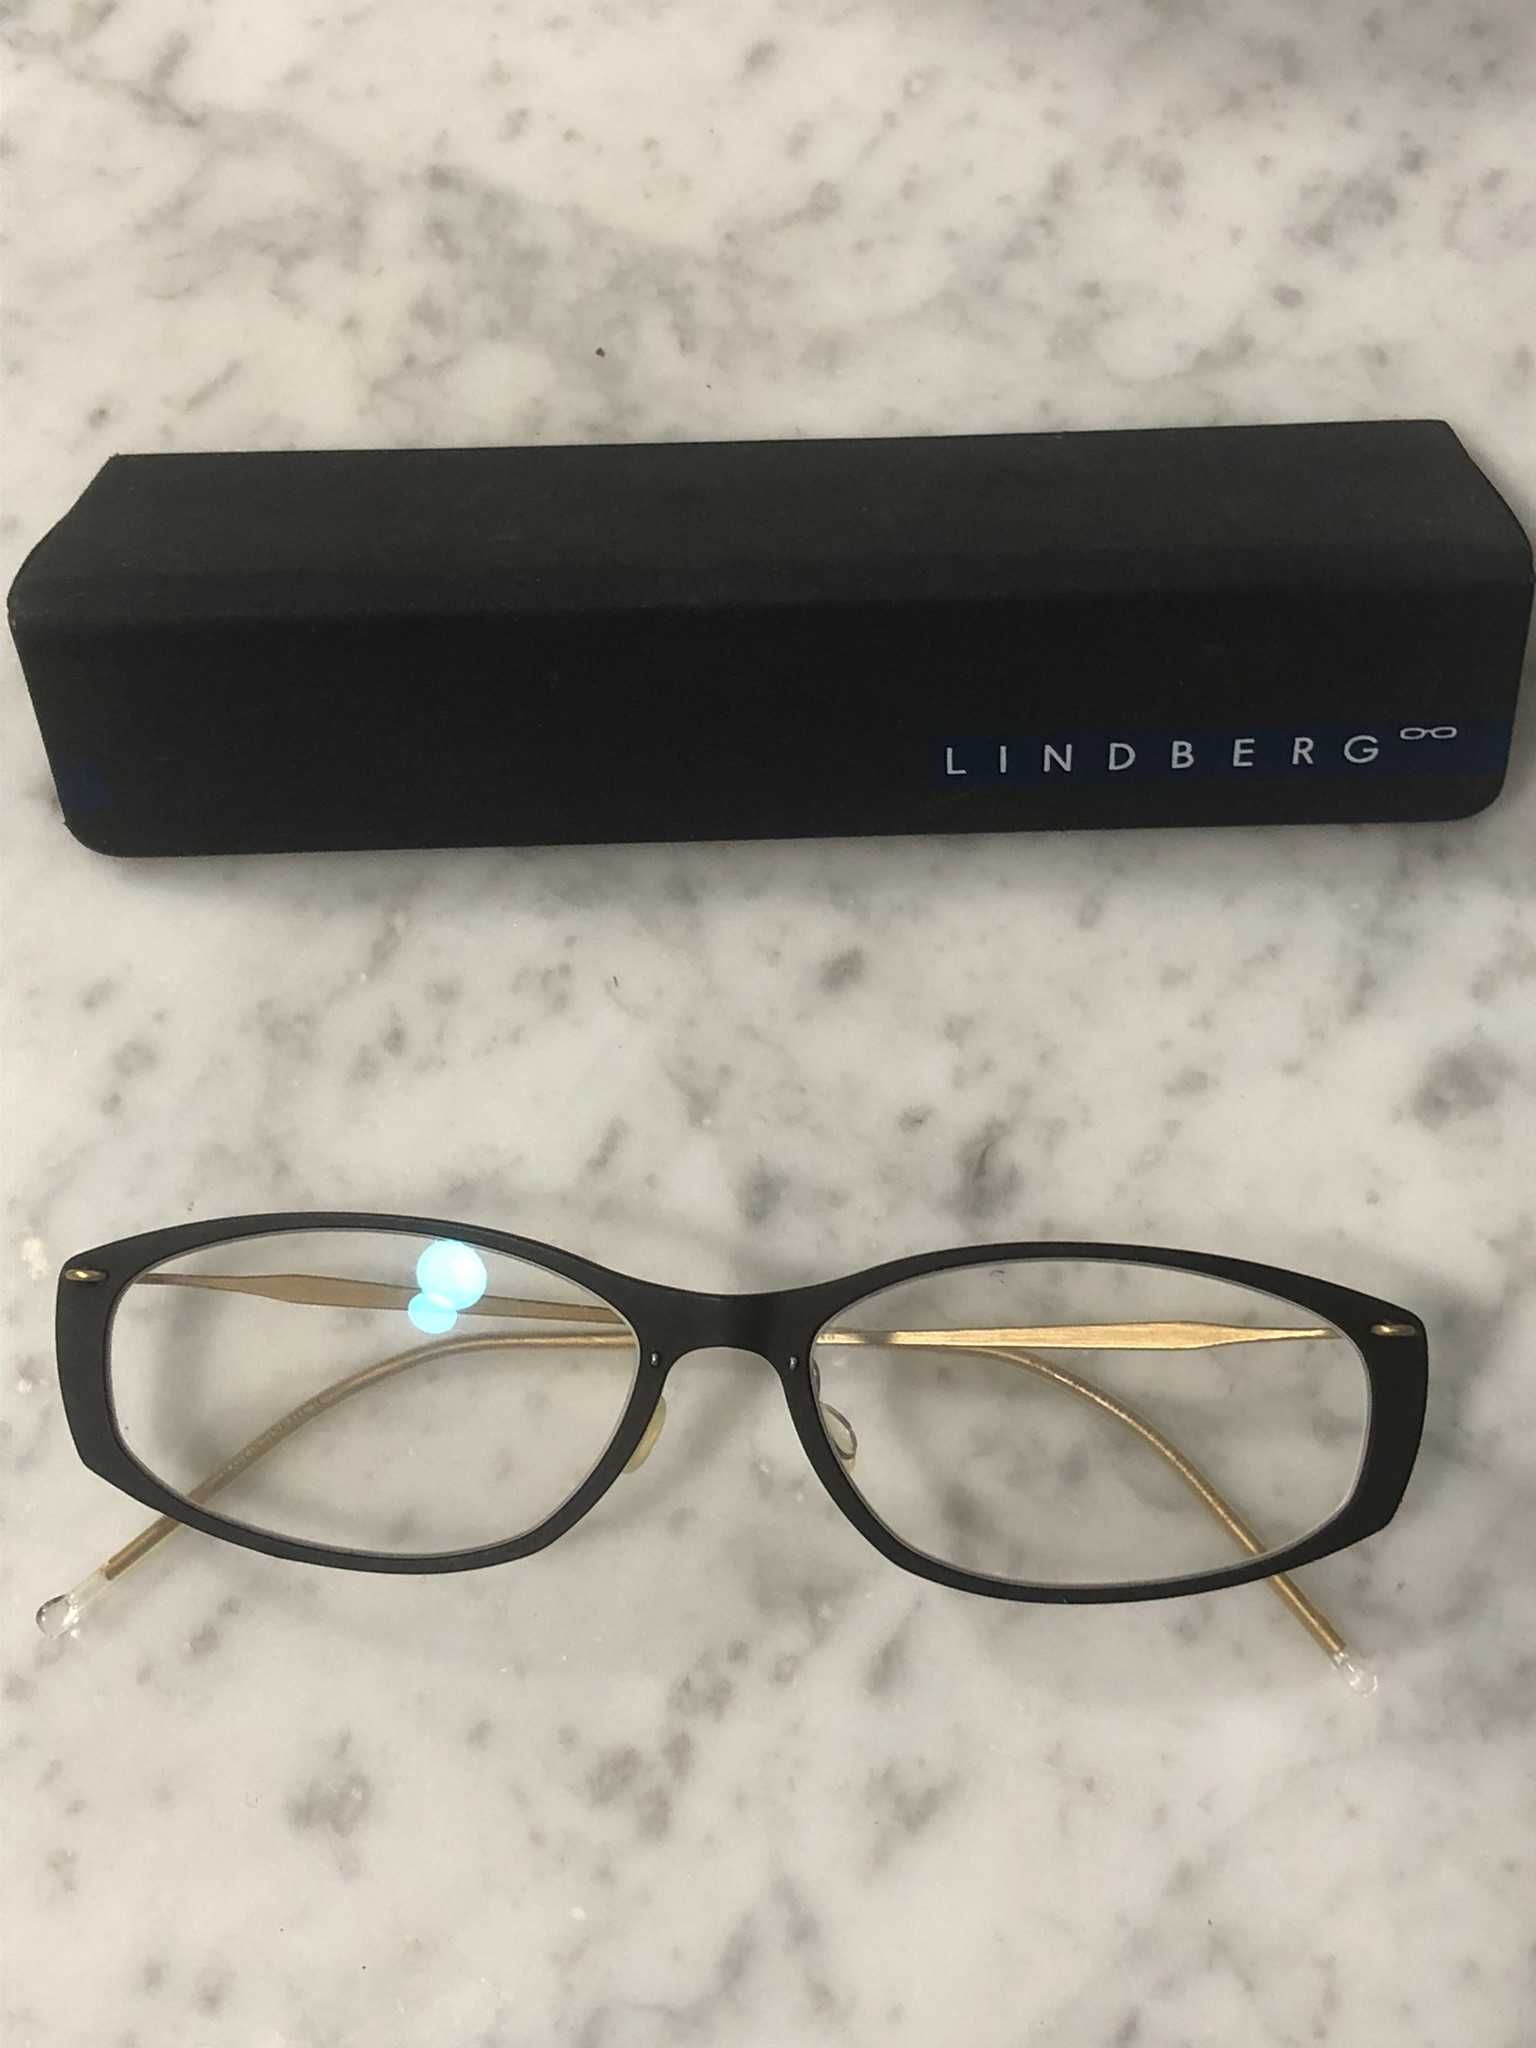 Okulary/ oprawki Lindberg marka premium czarne piękne, bardzo lekkie